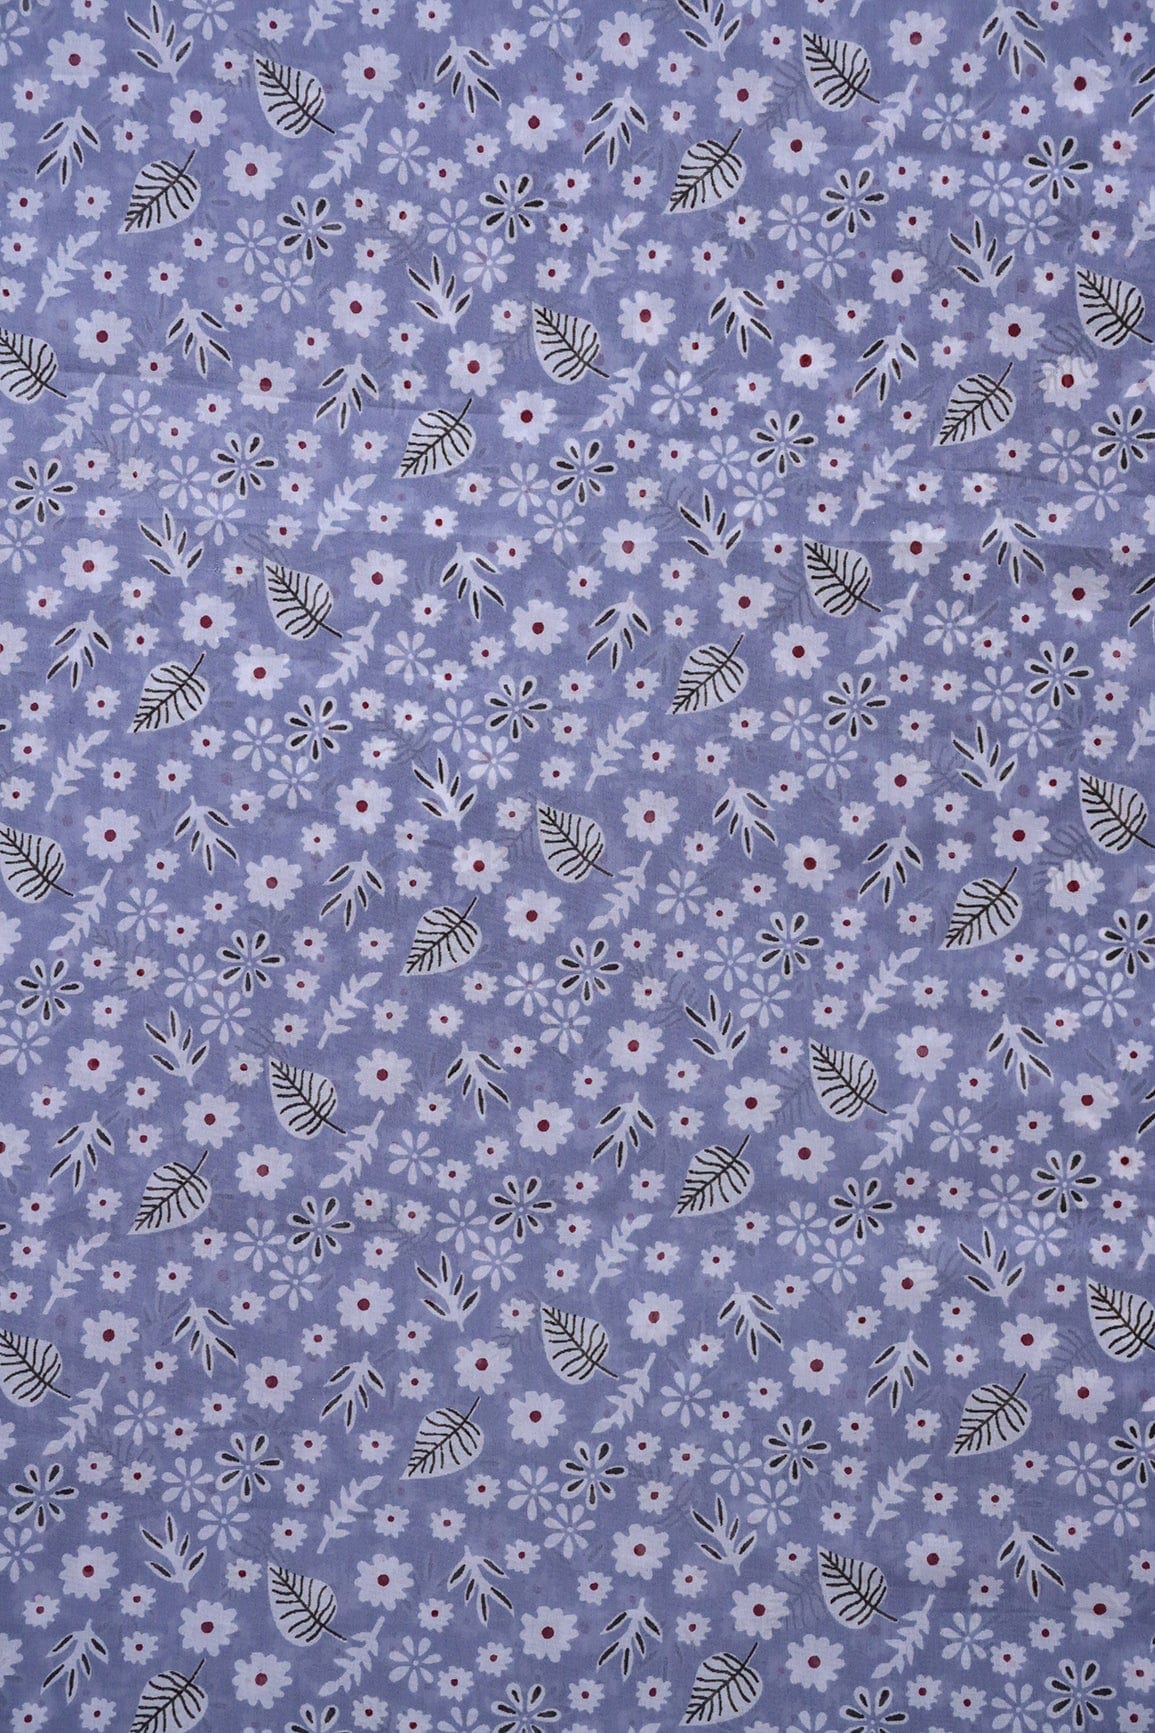 doeraa Prints Big Width "56" White Small Floral Digital Print On Light Blue Grey Georgette Fabric